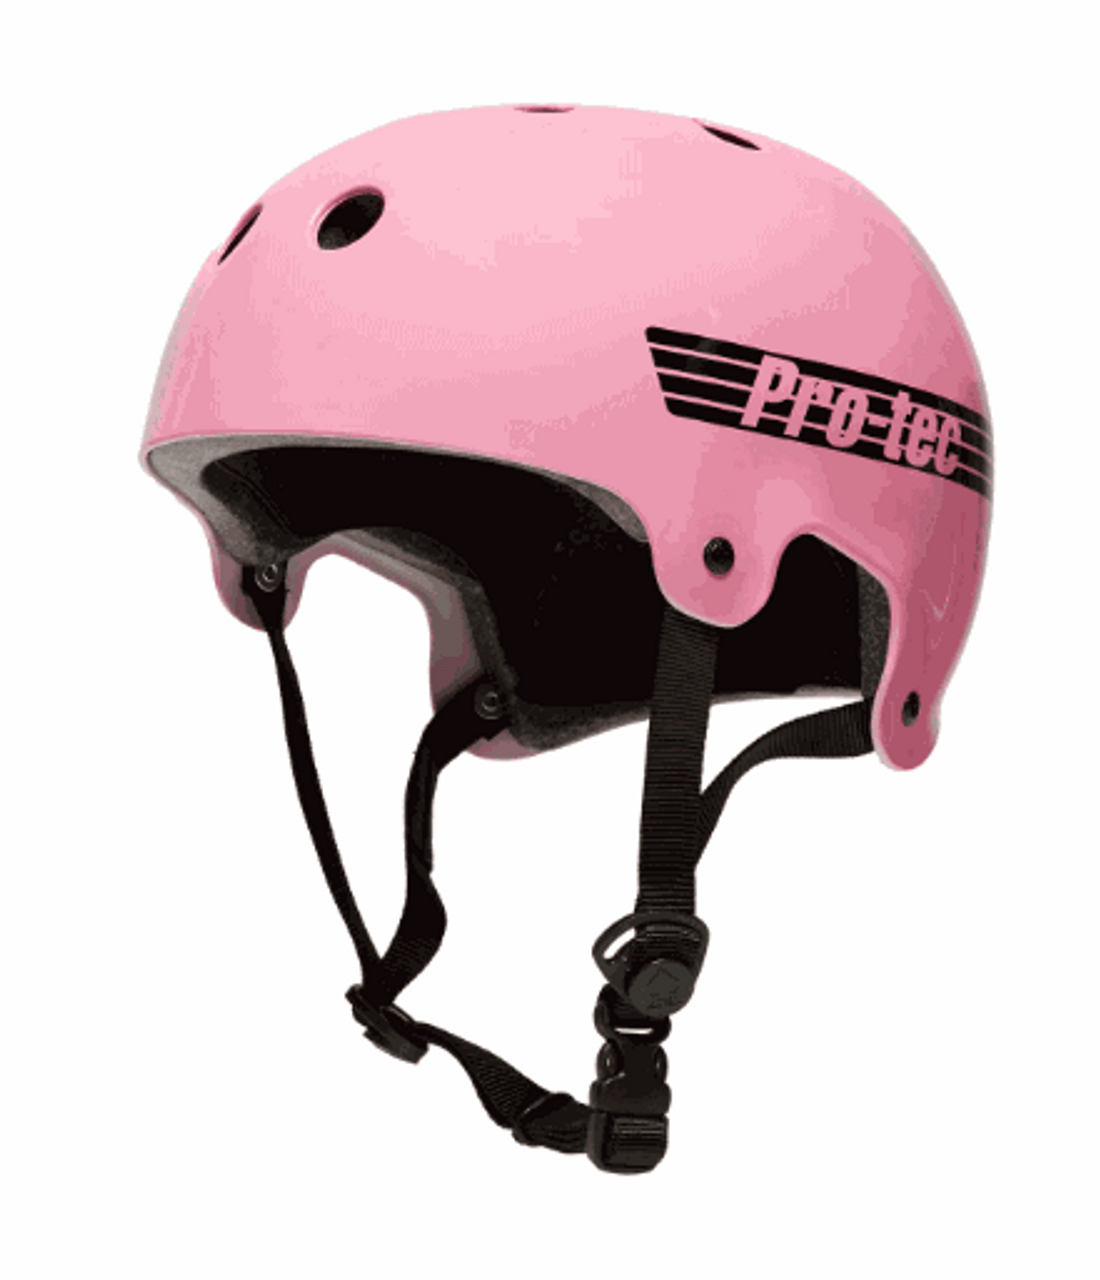 Pro Tec Helmet Old School Gloss Pink MD